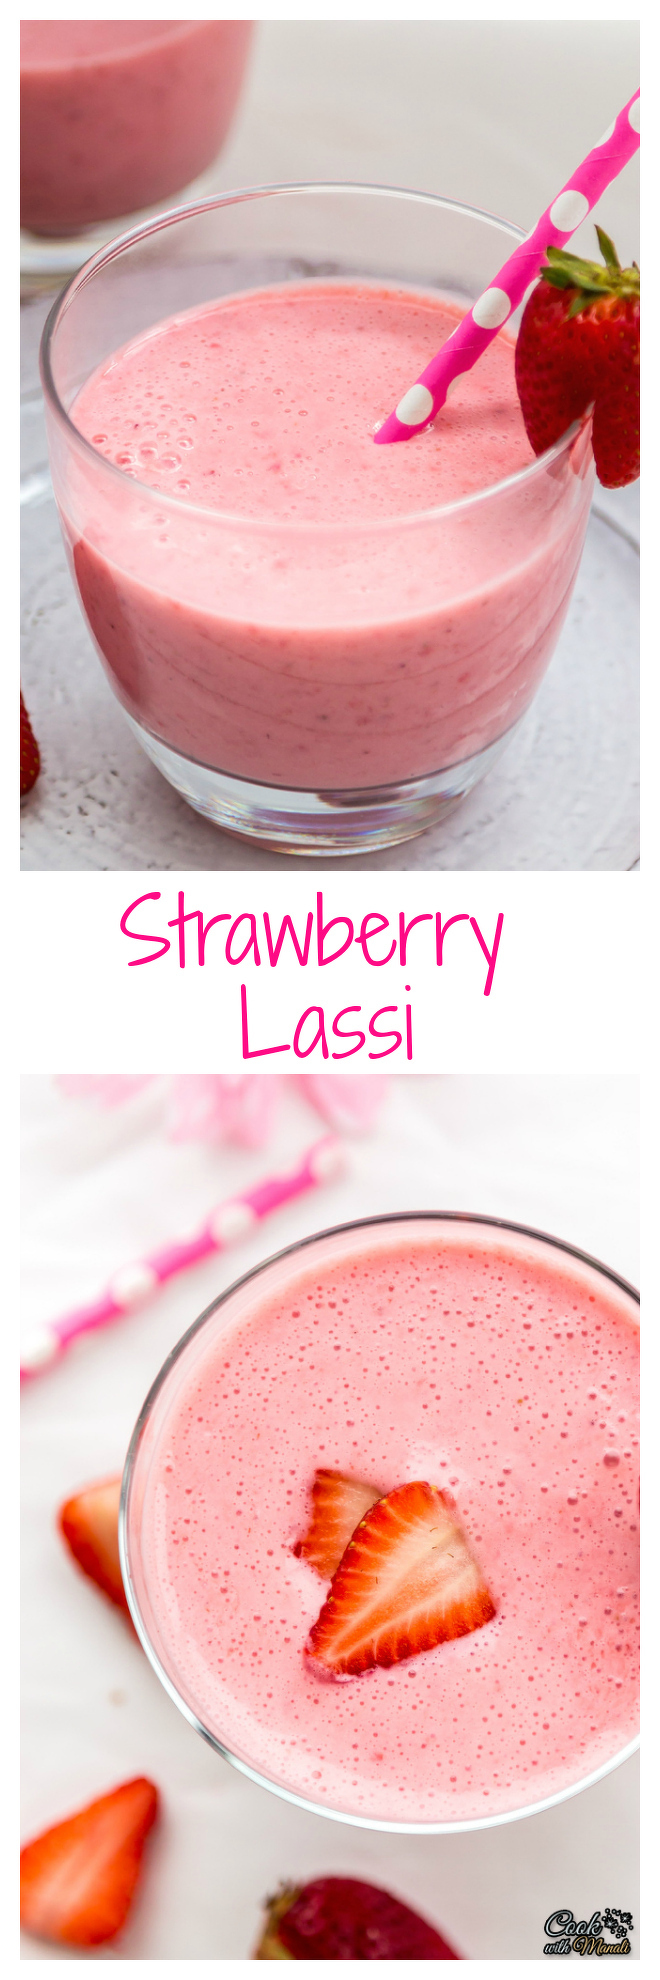 Strawberry-Lassi-Collage-nocwm